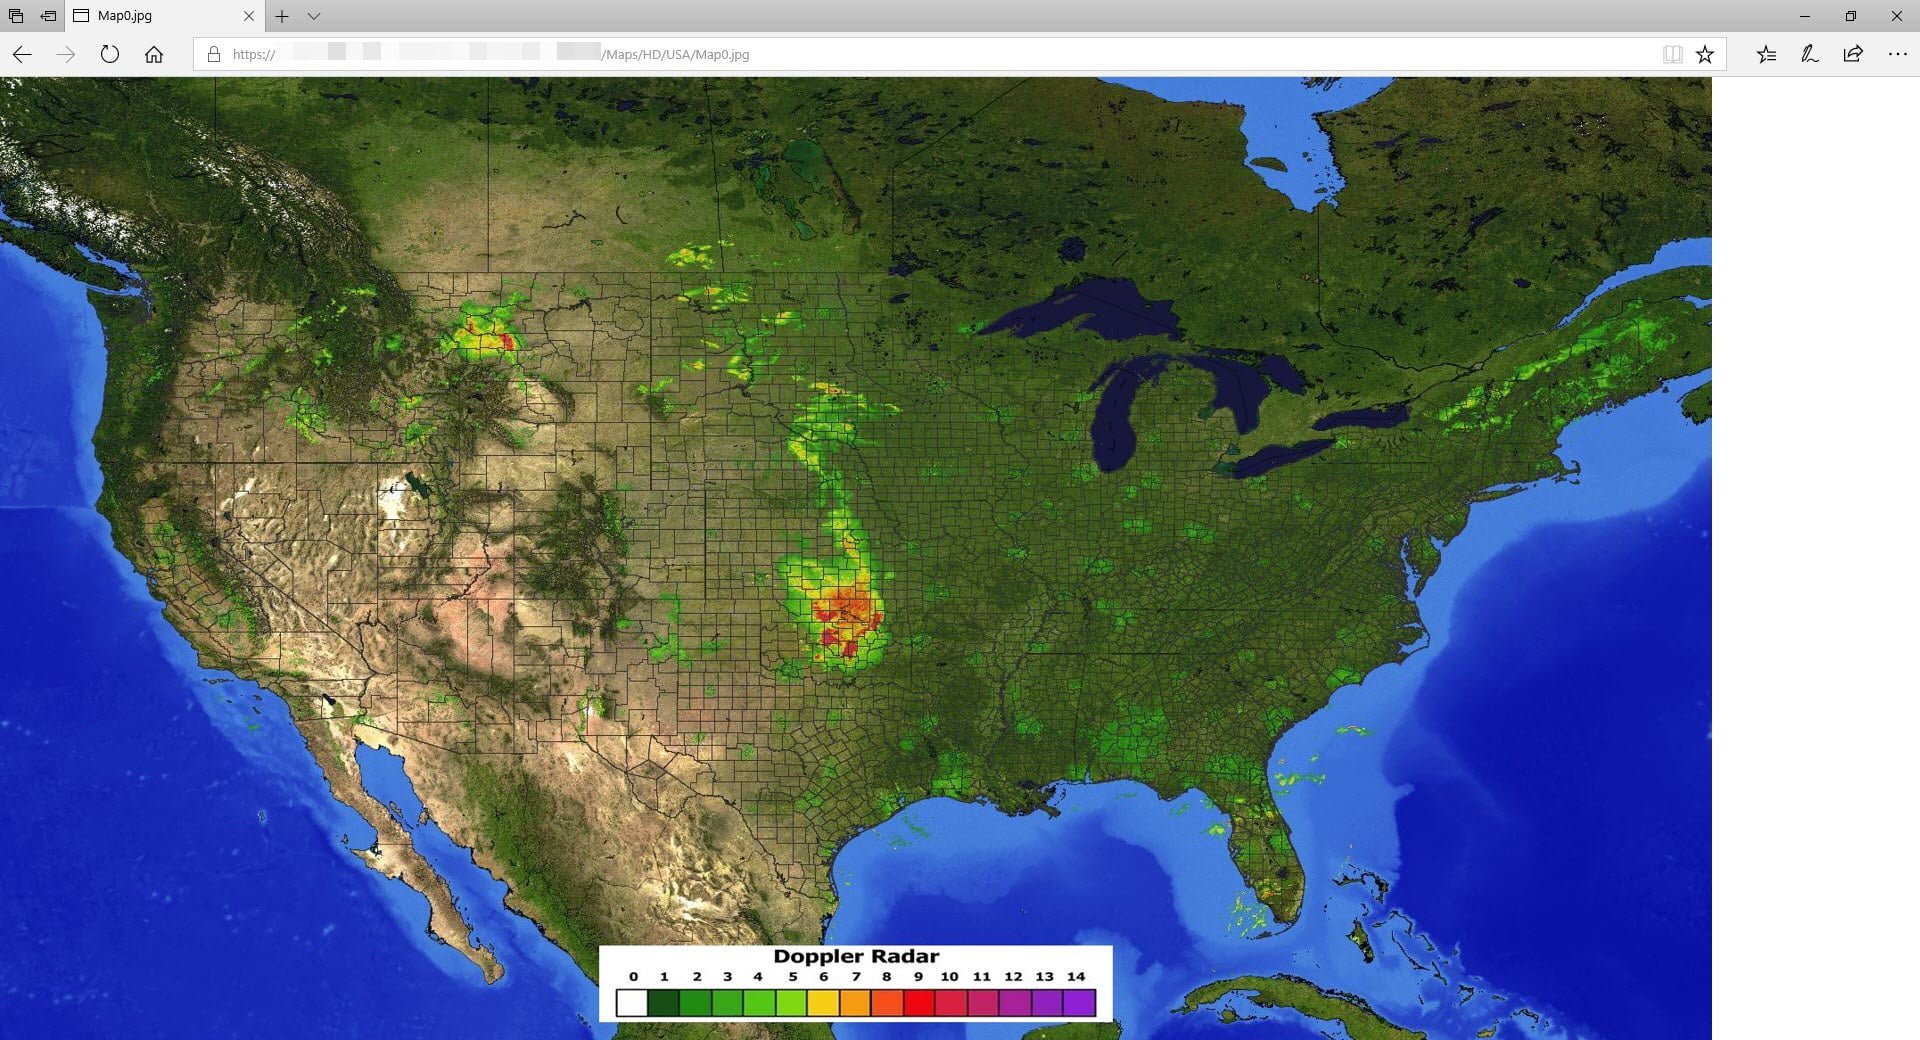 Live Doppler Radar Weather Map Image